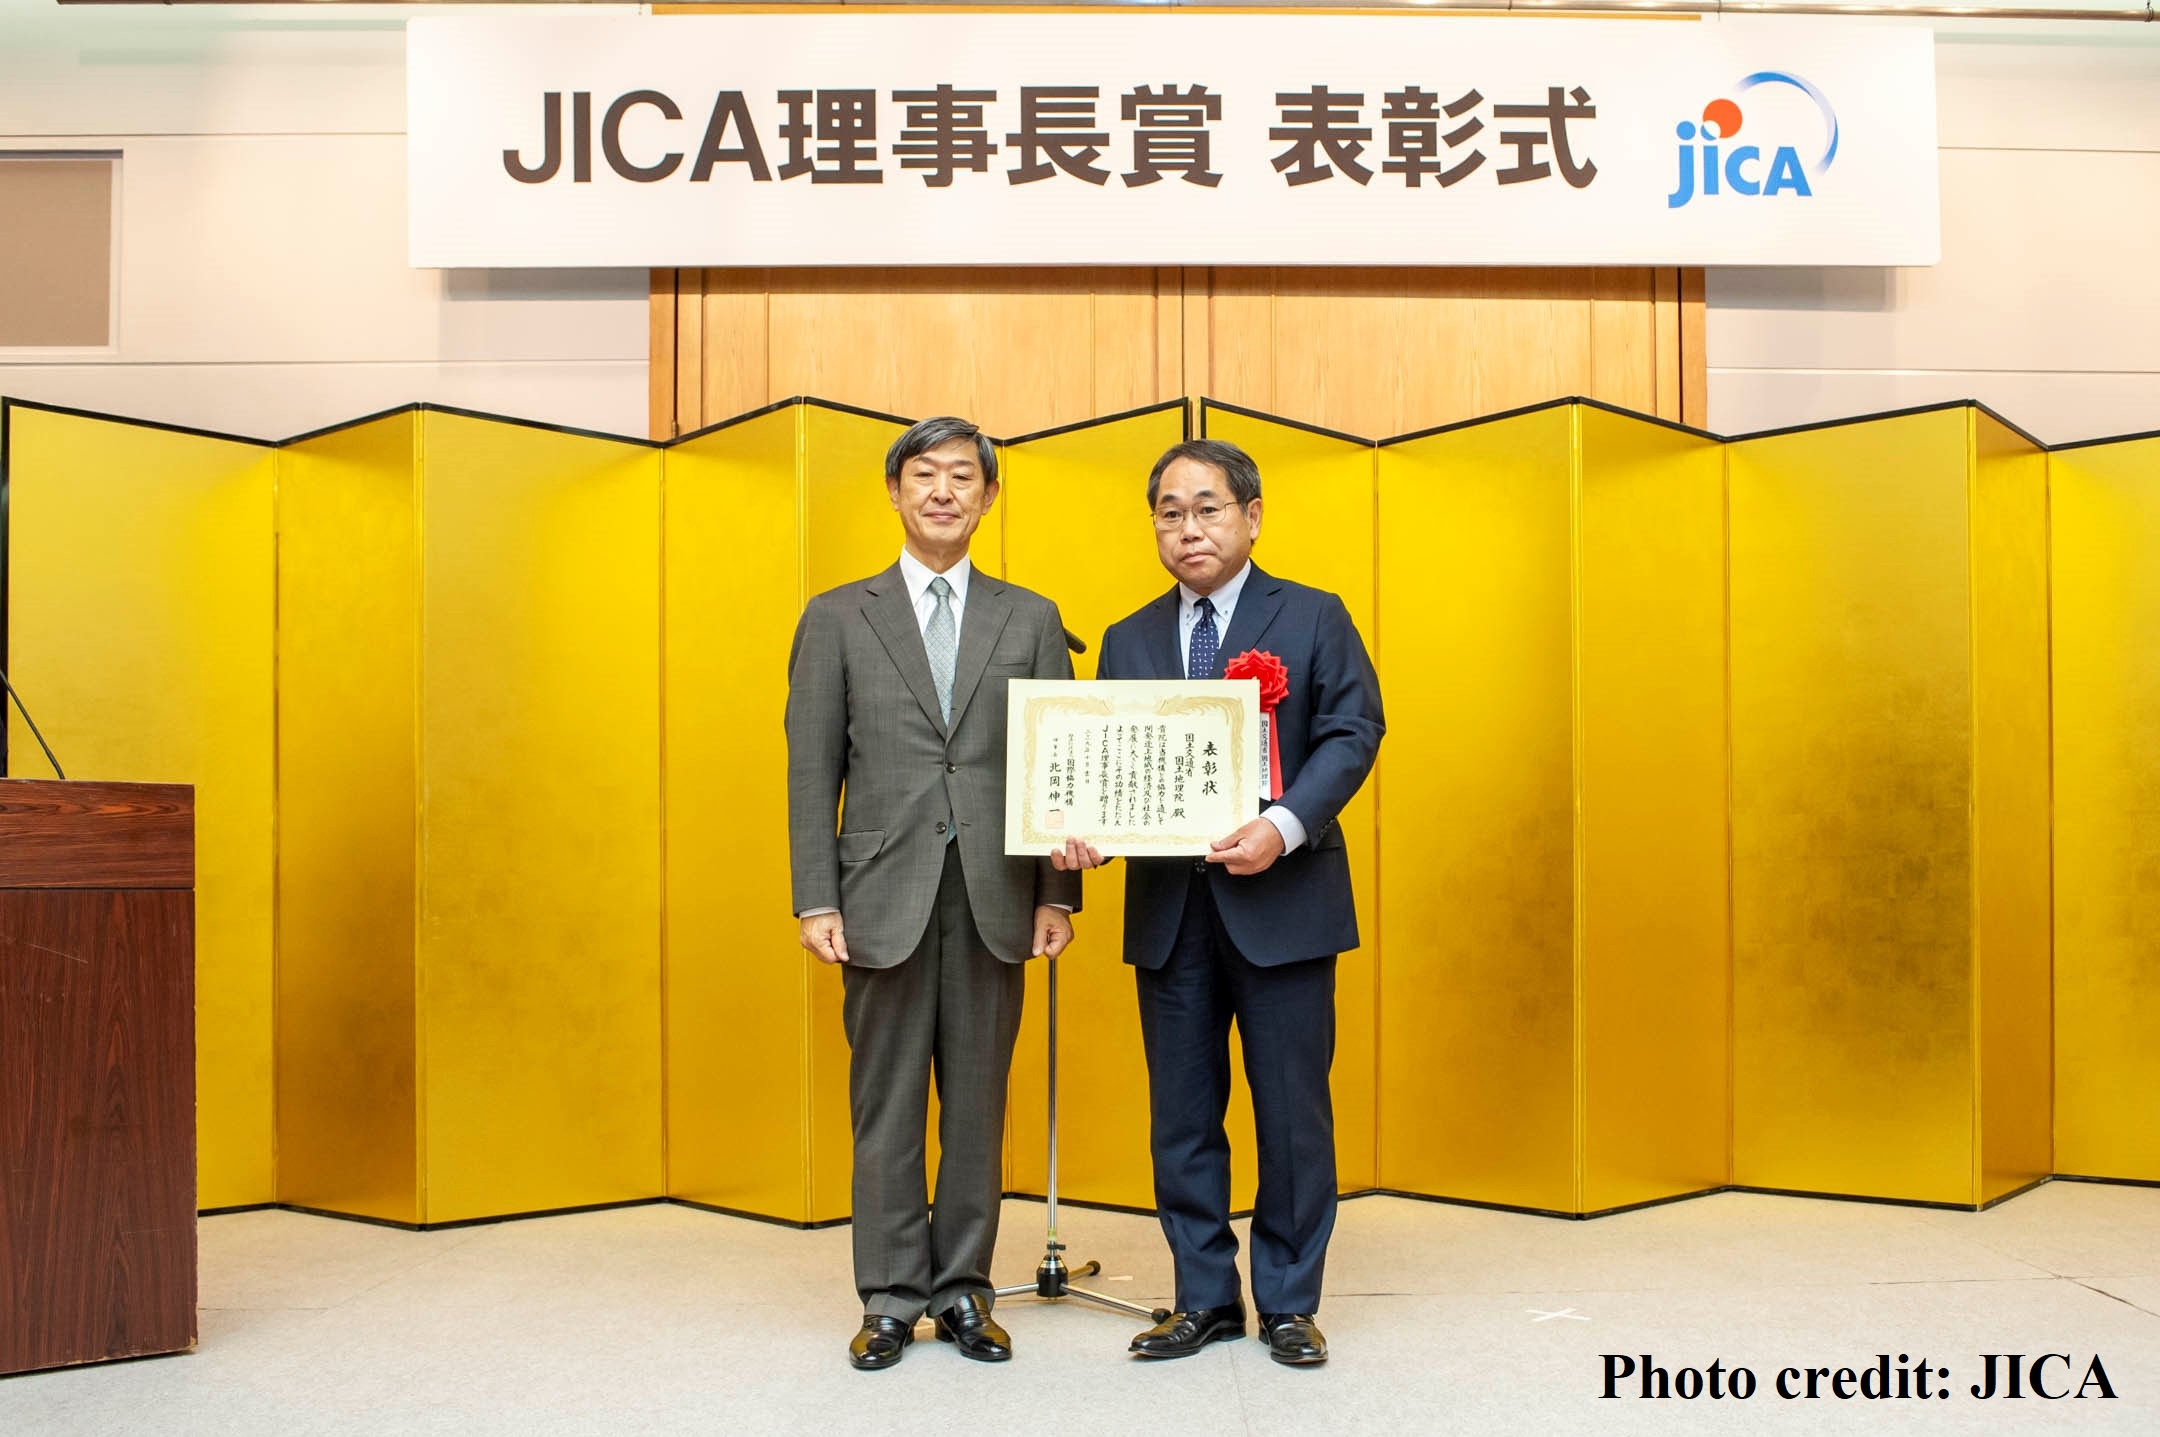 JICA President Award